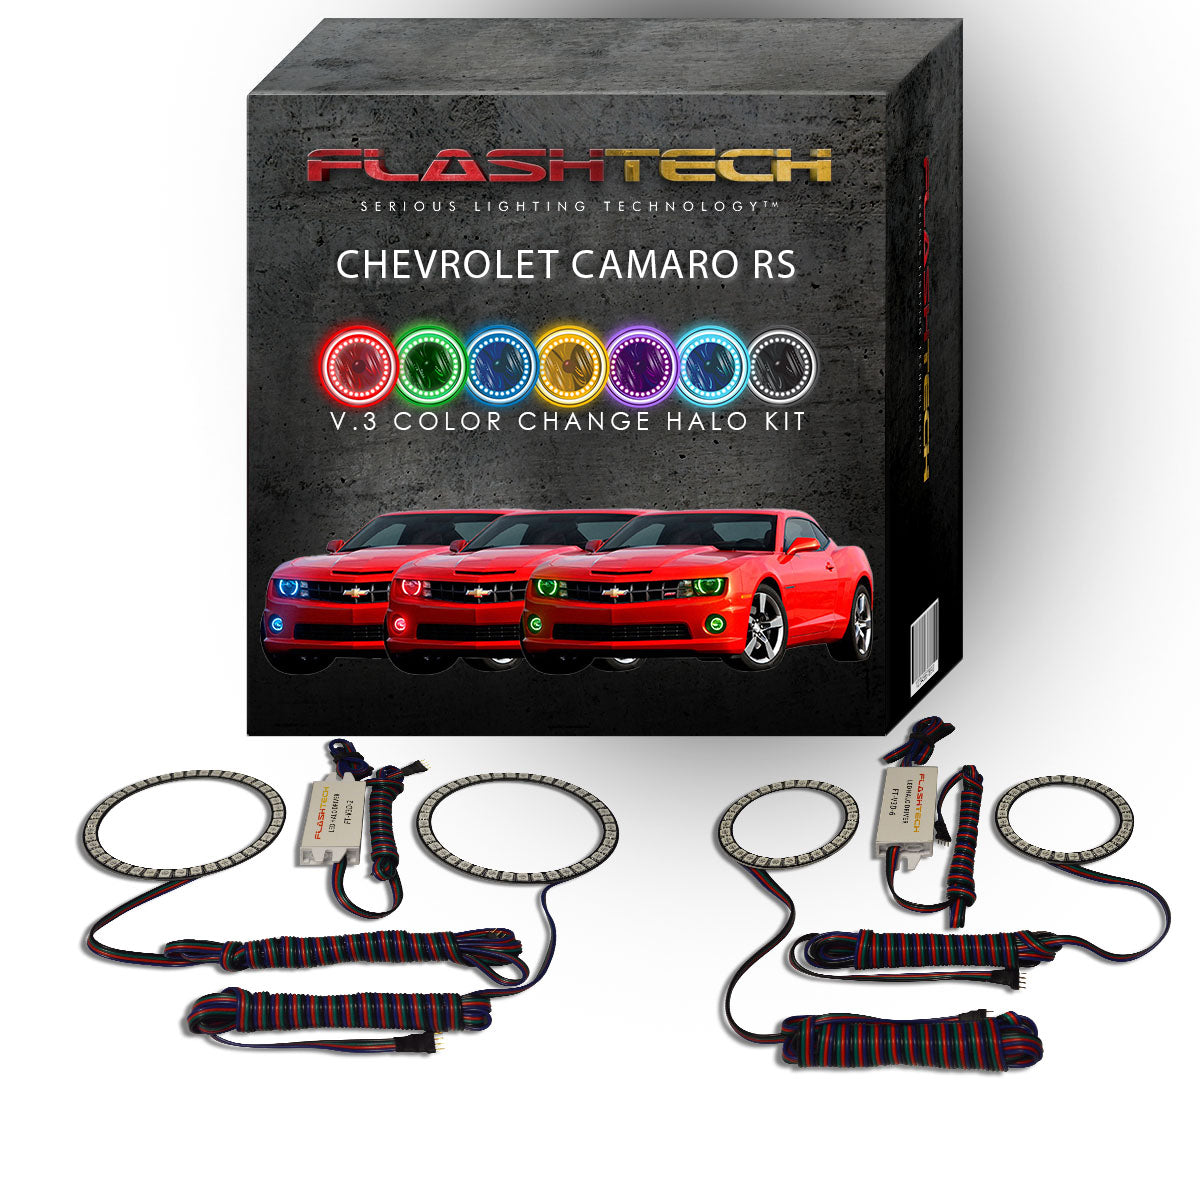 Chevrolet-Camaro-2010, 2011, 2012, 2013-LED-Halo-Headlights and Fog Lights-RGB-No Remote-CY-CARS1013-V3HF